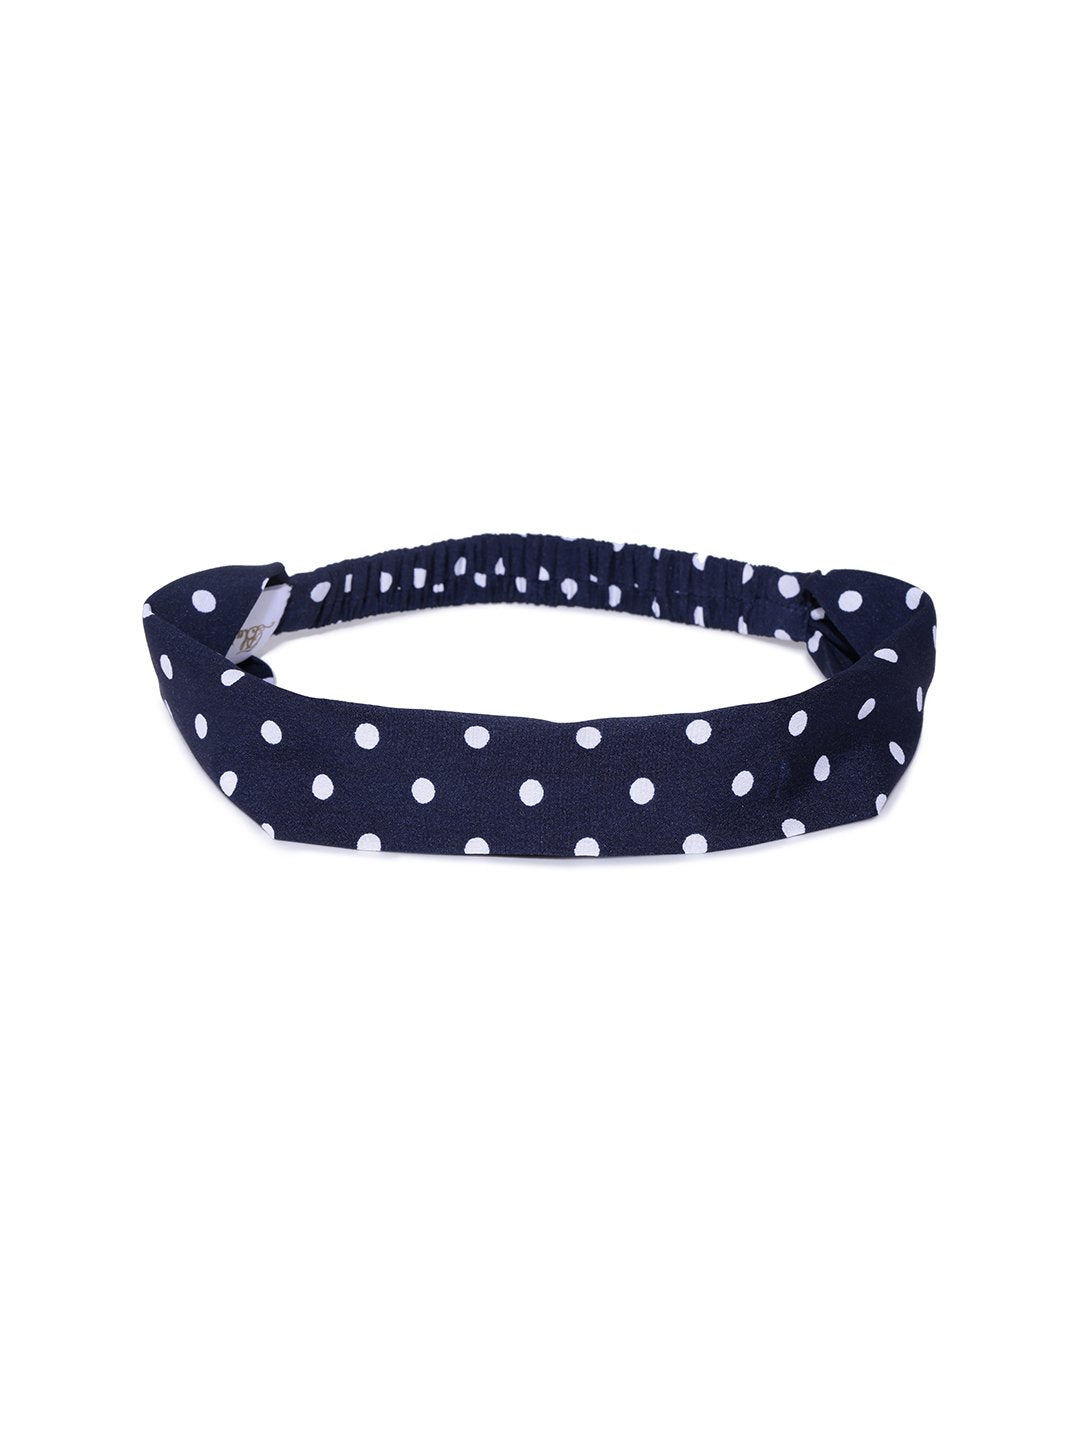 Blueberry navy blue polka dot hair band